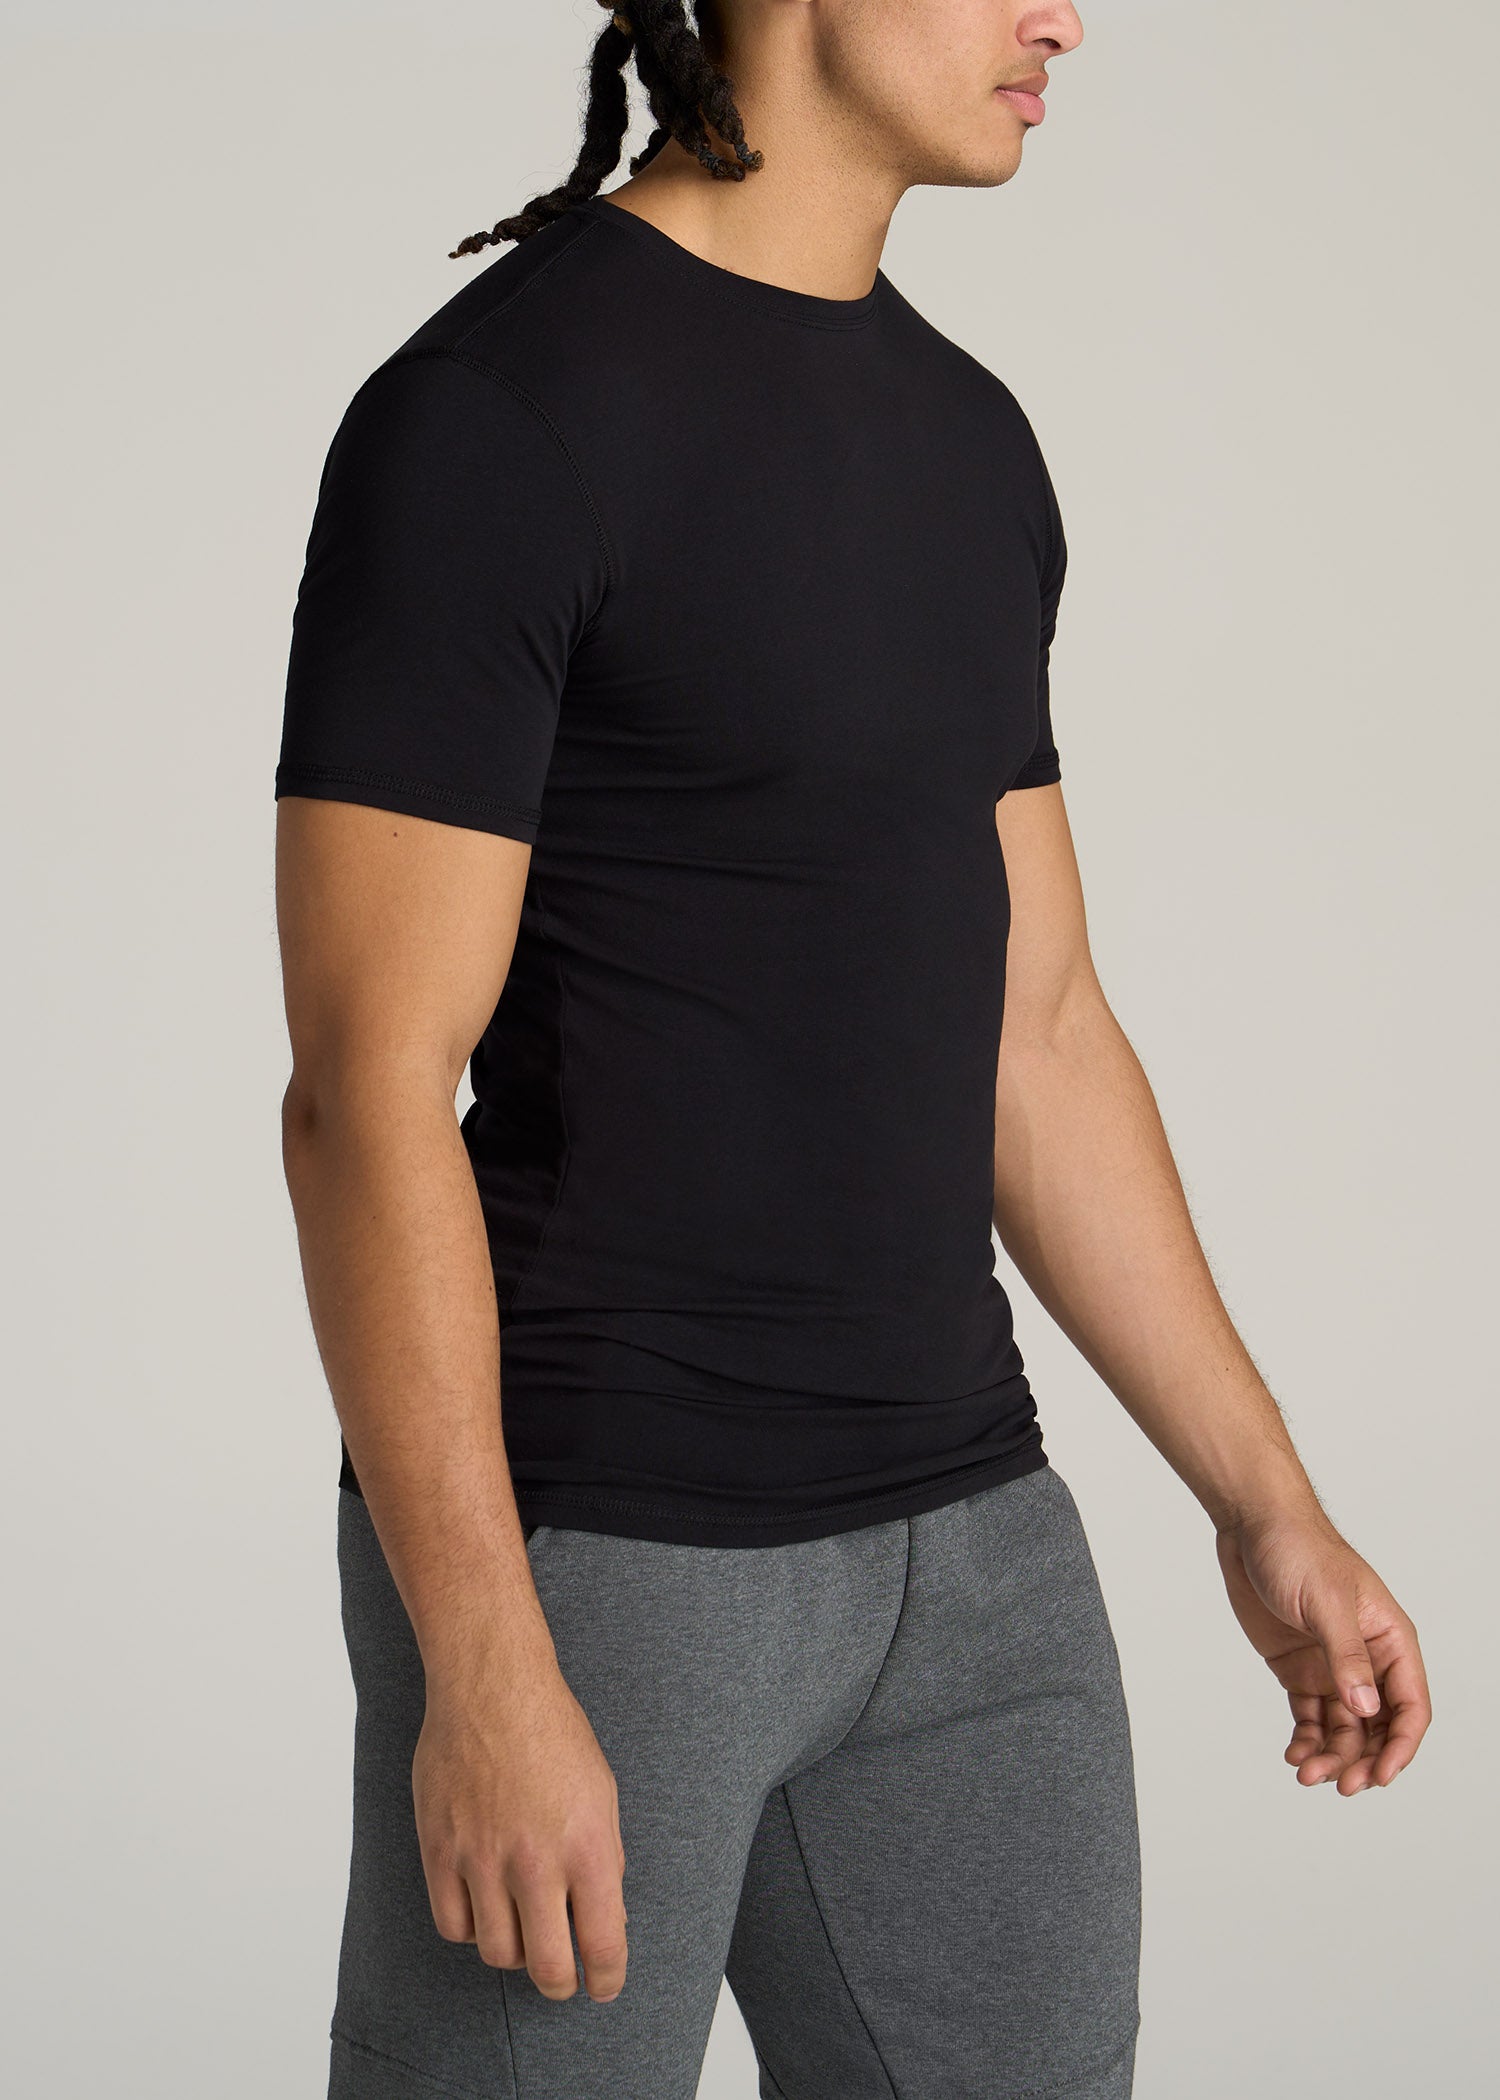 Long Sleeve Slim Fit Shirt: Tall Men's Long Sleeve Black Tee – American Tall